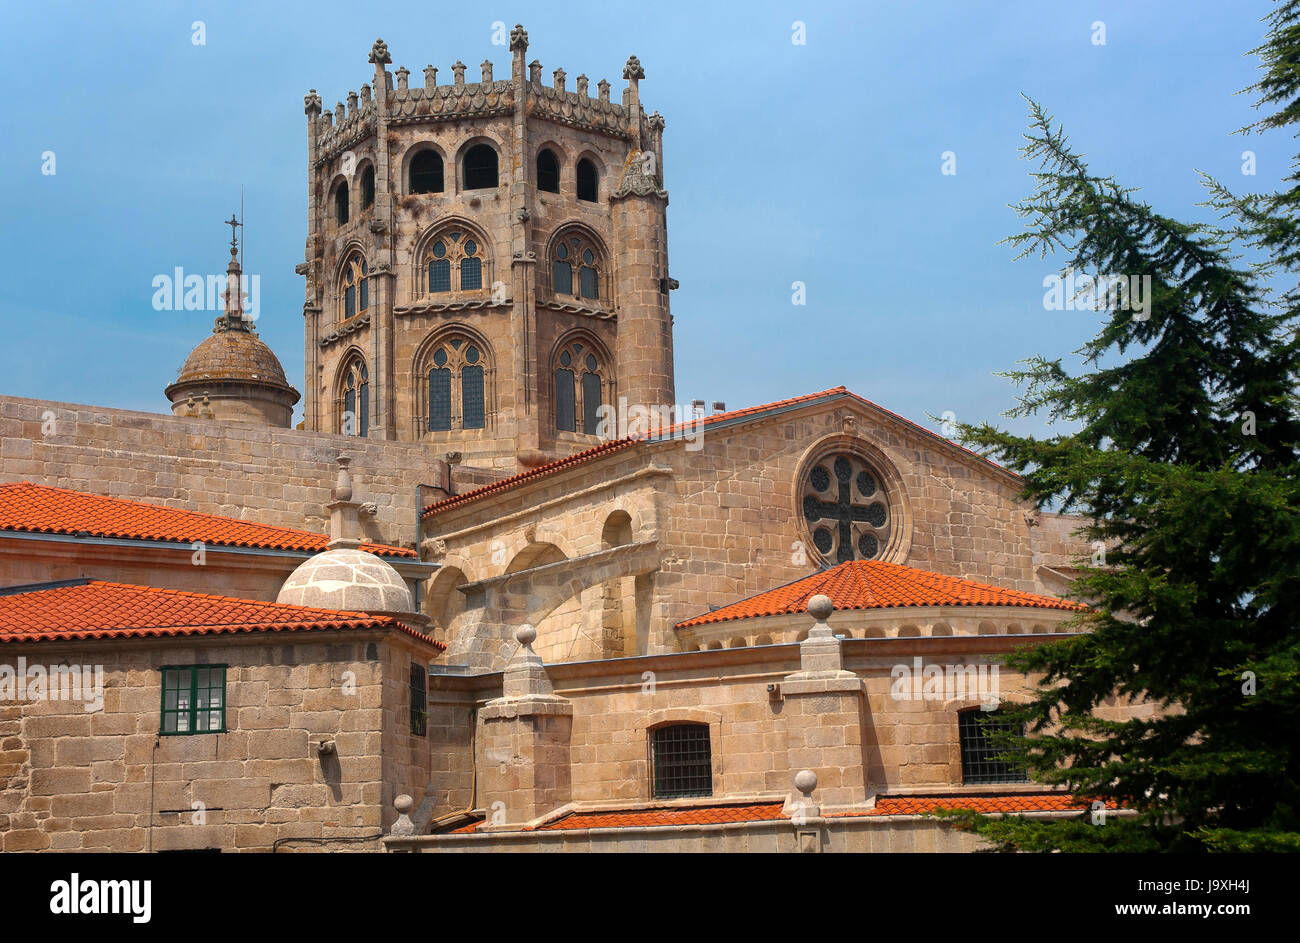 Gothic Cathedral of San Martin de Tours - 12th century, Orense, Region of Galicia, Spain, Europe Stock Photo